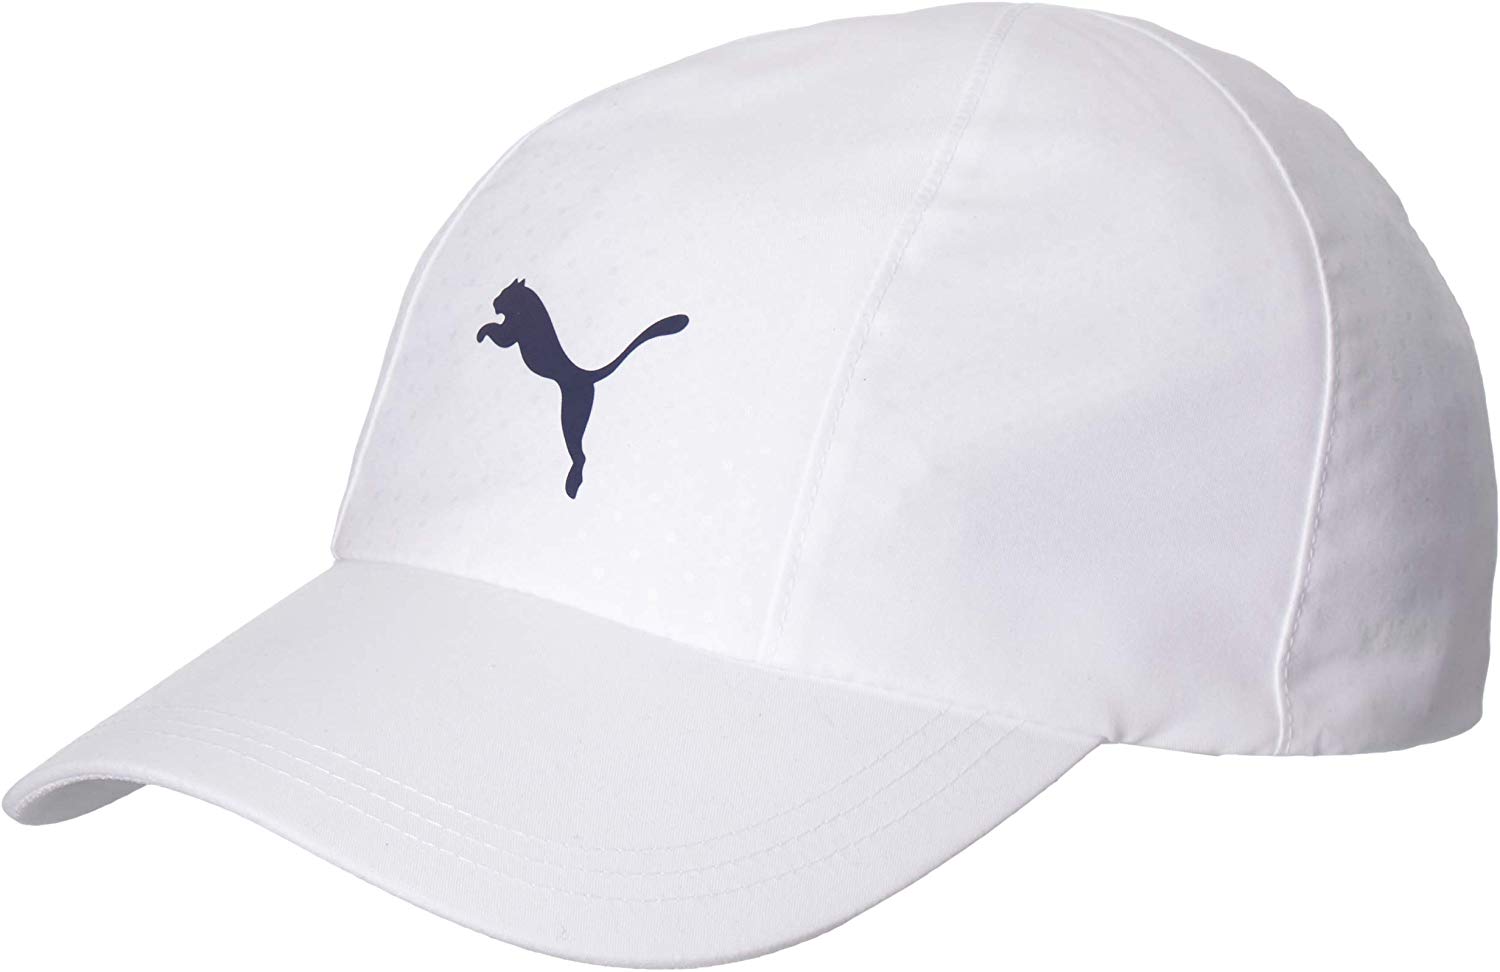 Puma Womens 2019 Daily Golf Hats